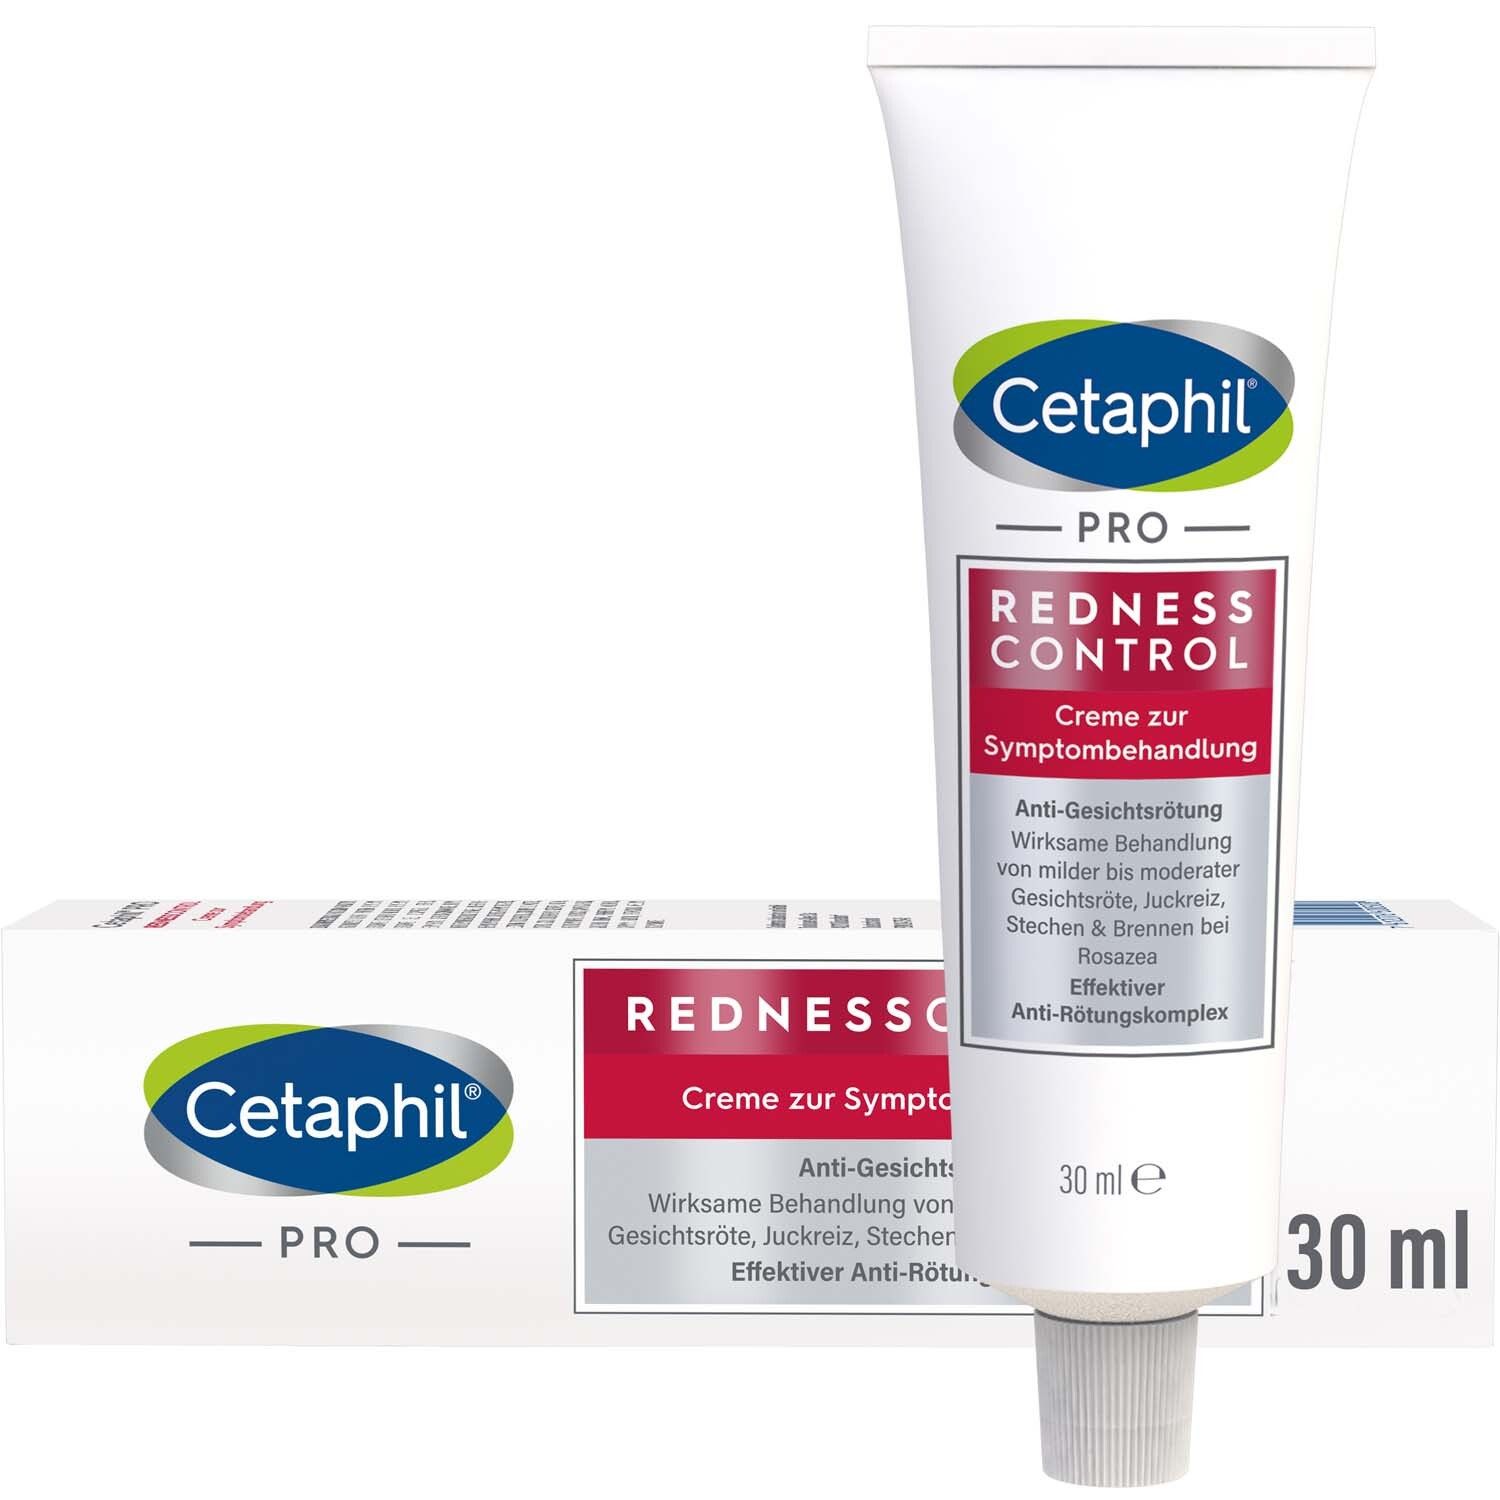 Image of Cetaphil® RednessControl Creme zur Symptombehandlung